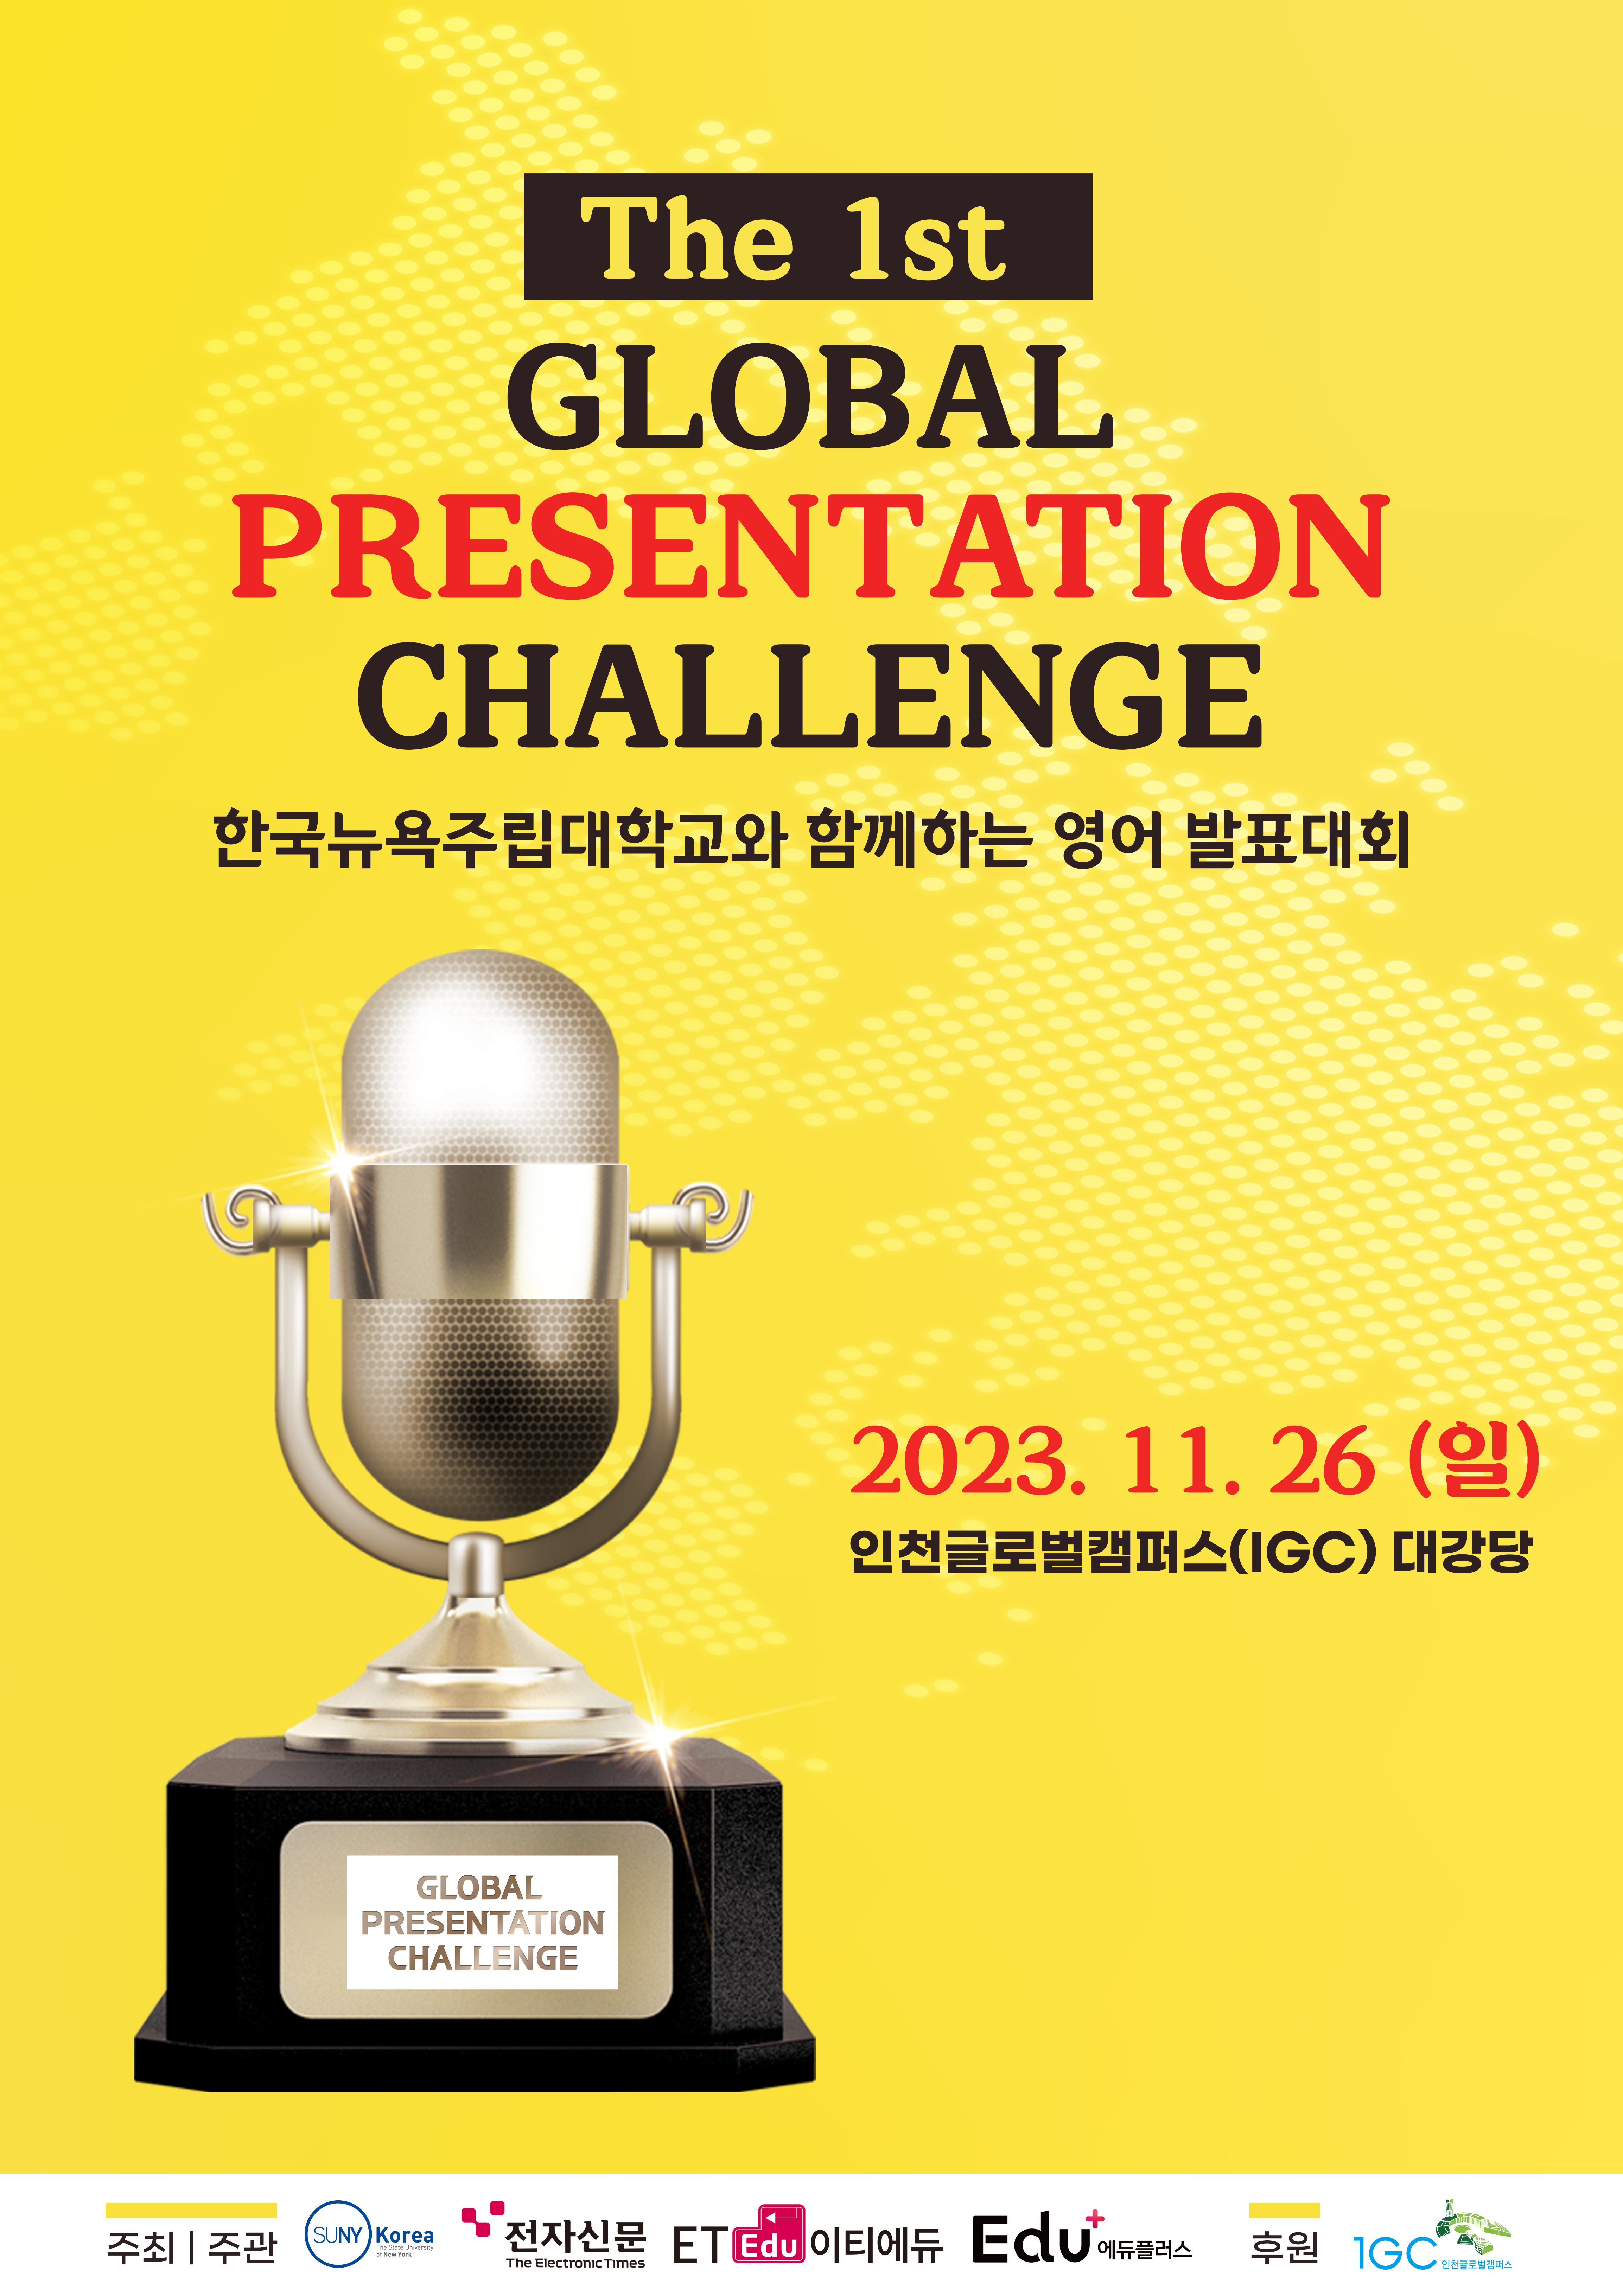 The 1st Global Presentation Challenge